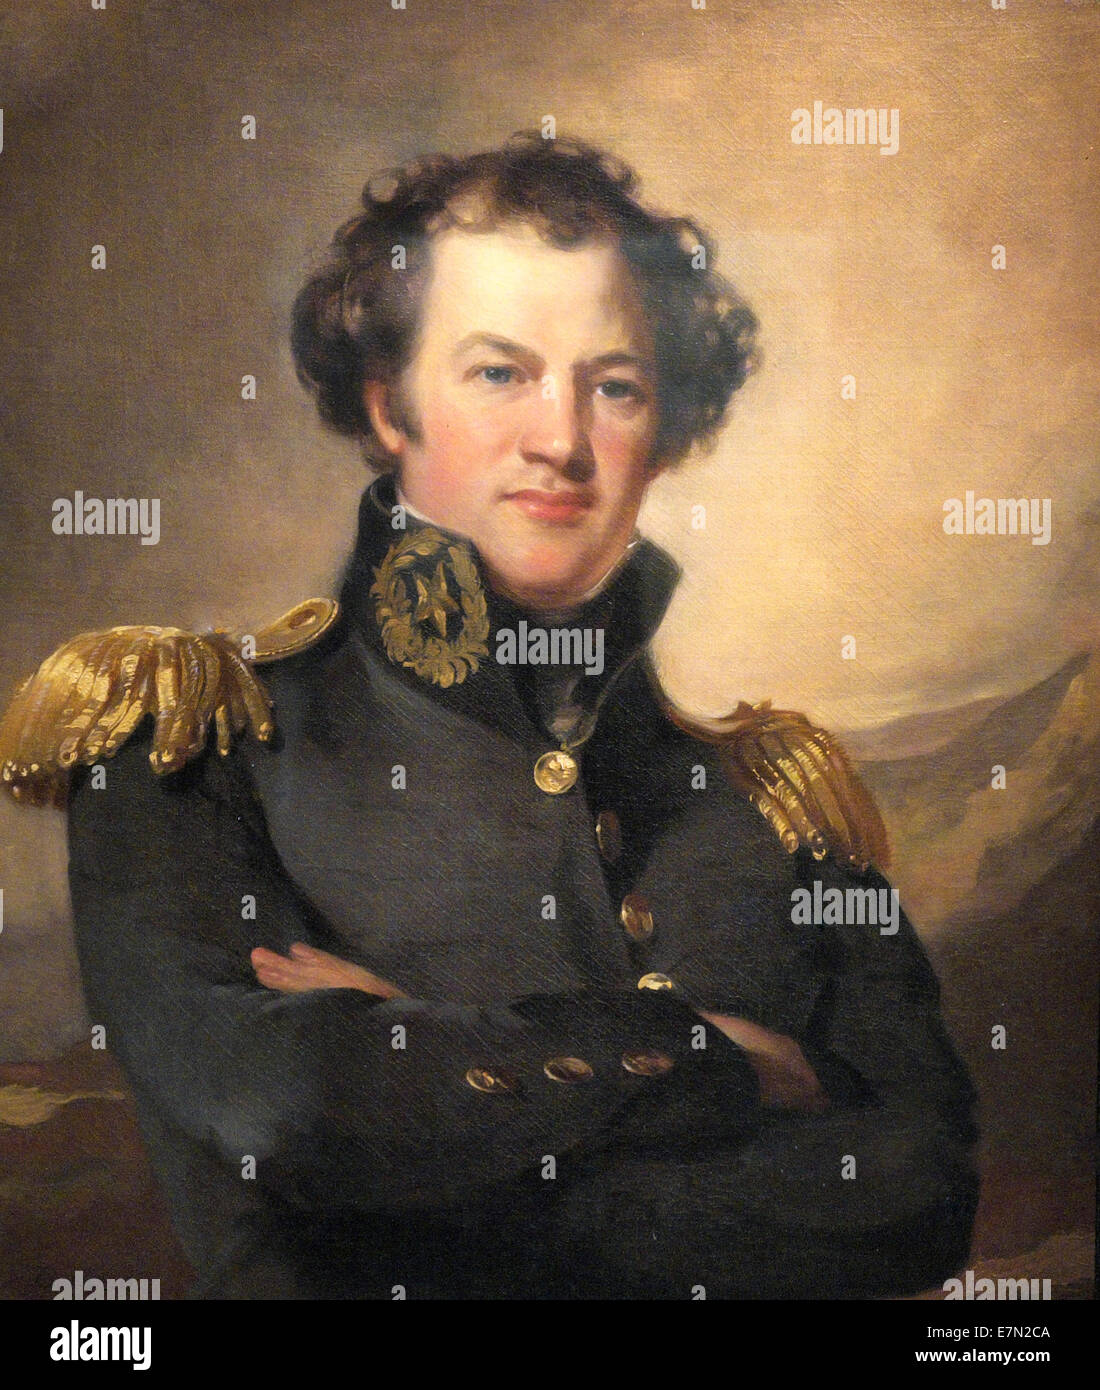 Alexander Macomb, Comandante General del Ejército de Estados Unidos de 1828 a 1841 Foto de stock